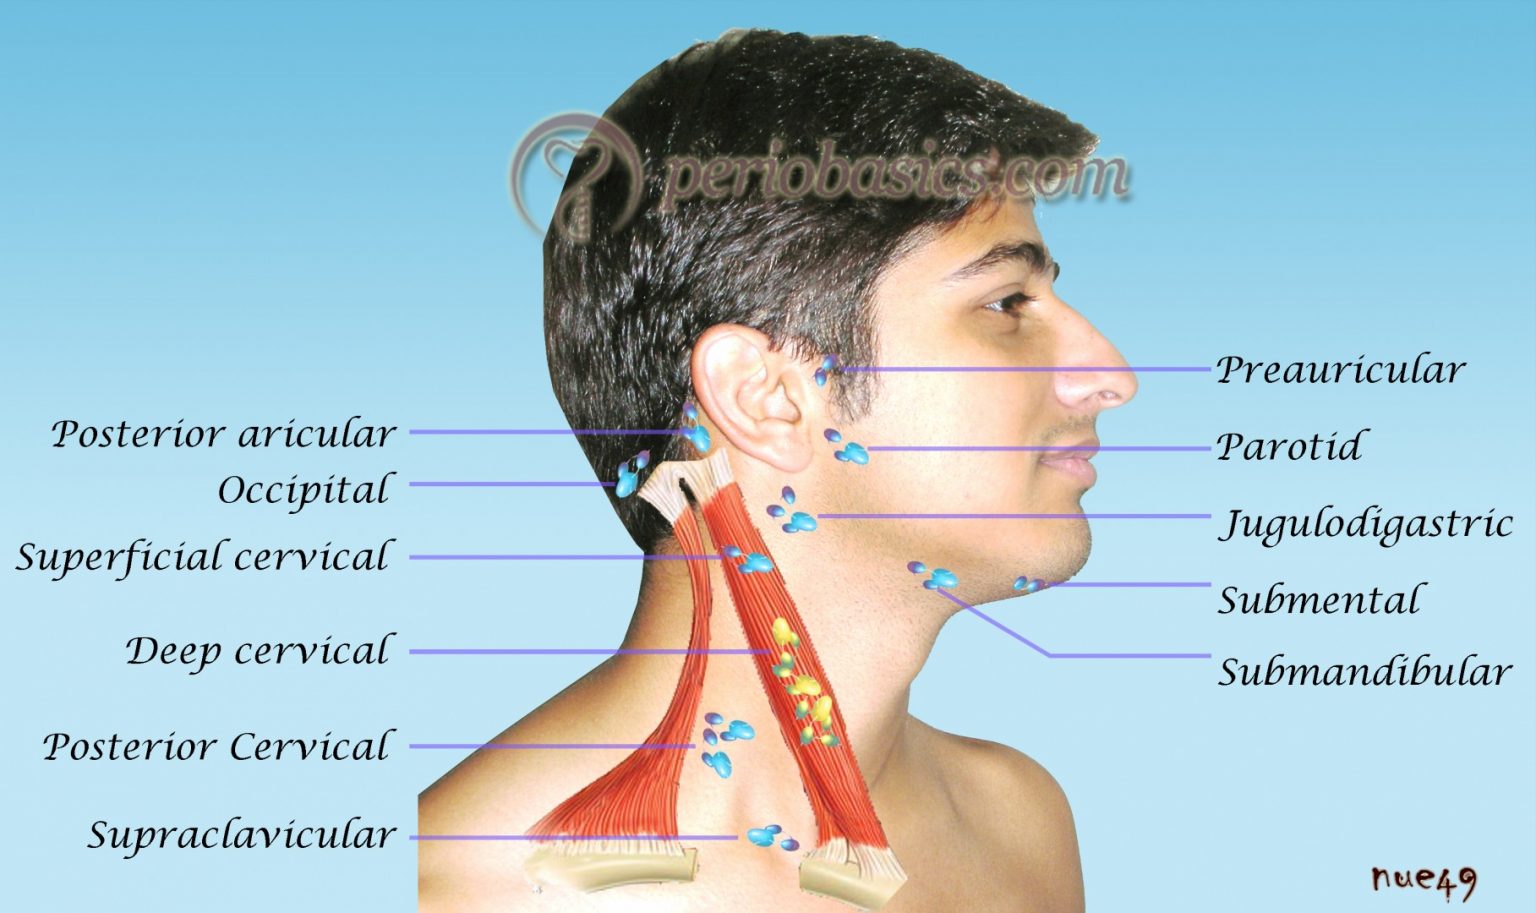 lymph node swollen back of neck